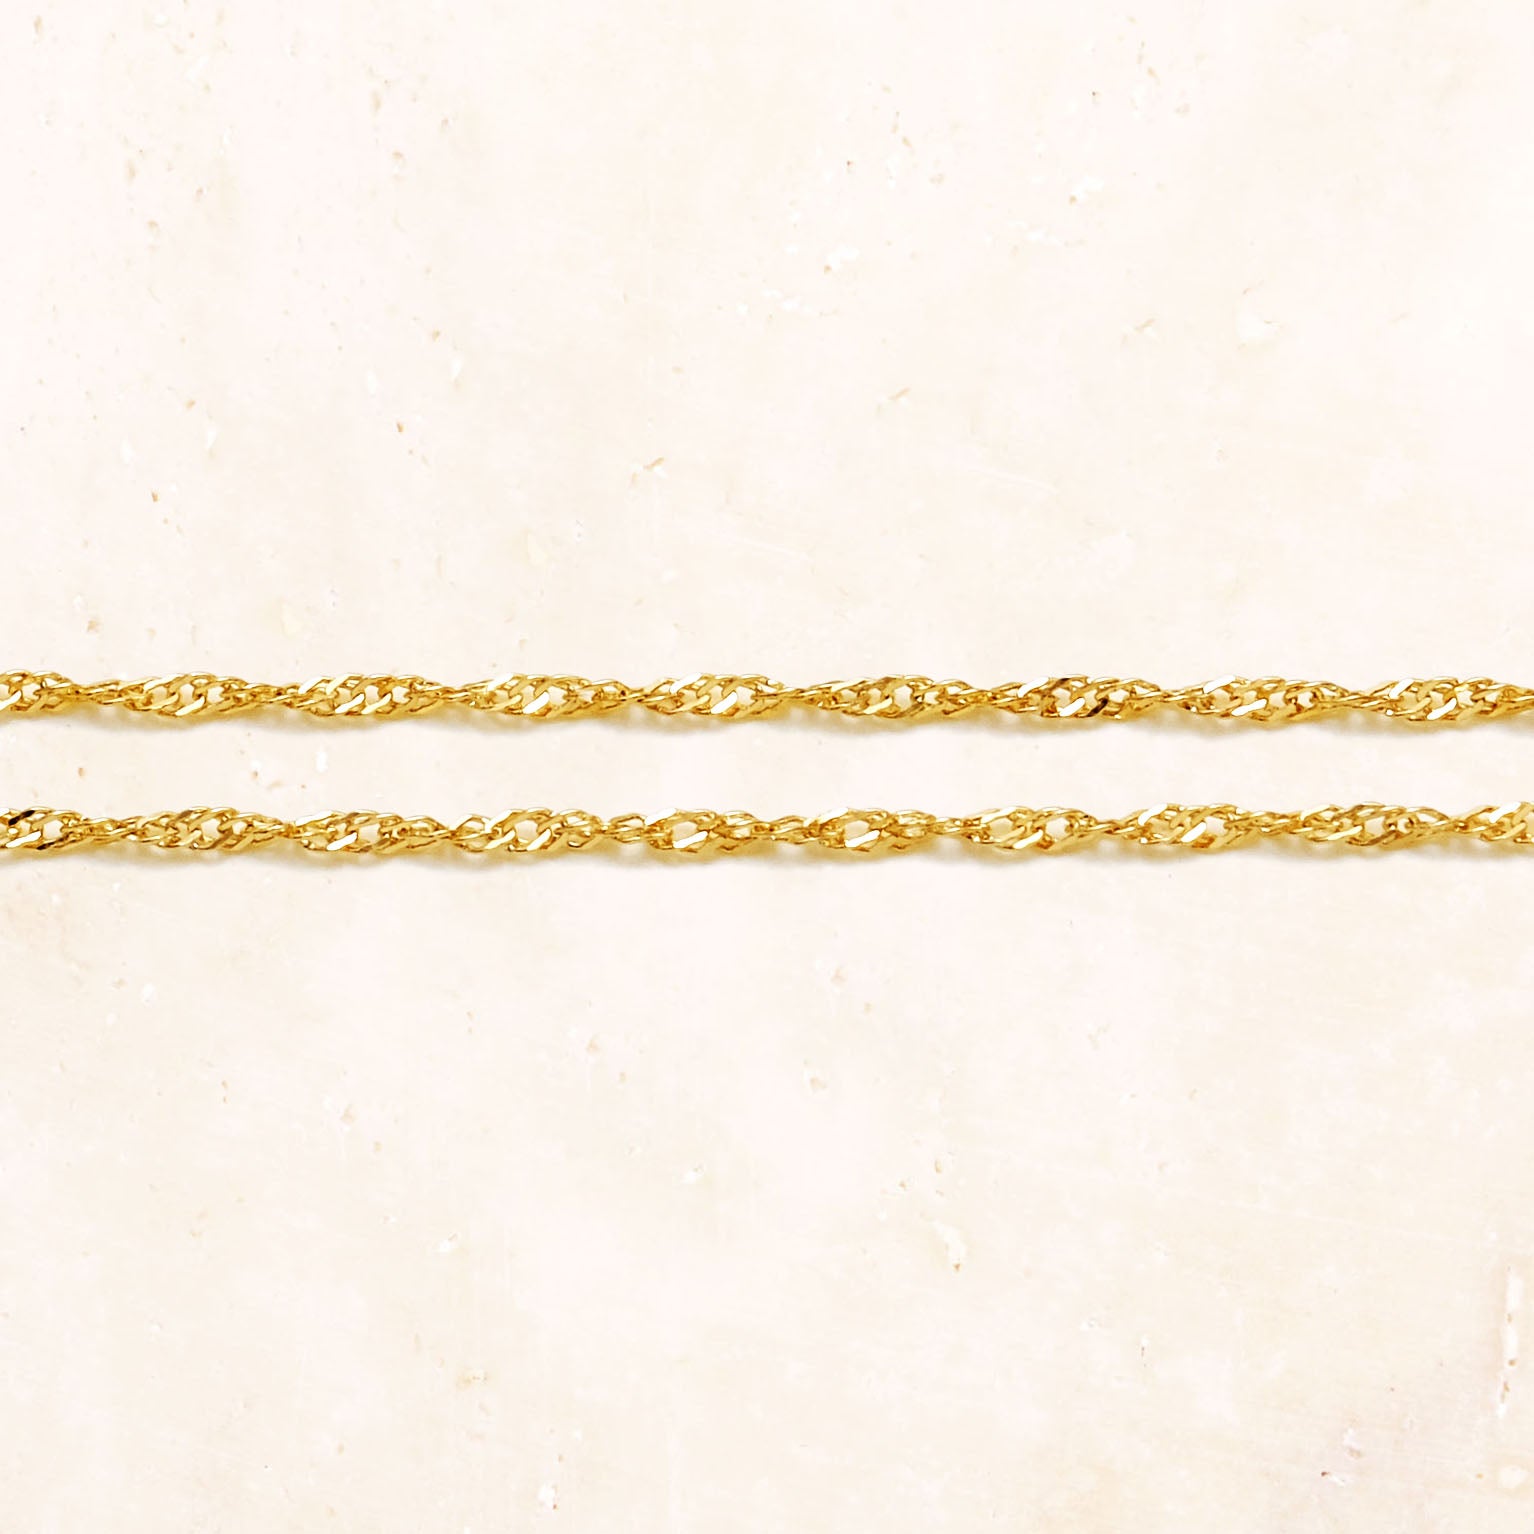 18K Gold Screw Chain Necklace 45cm